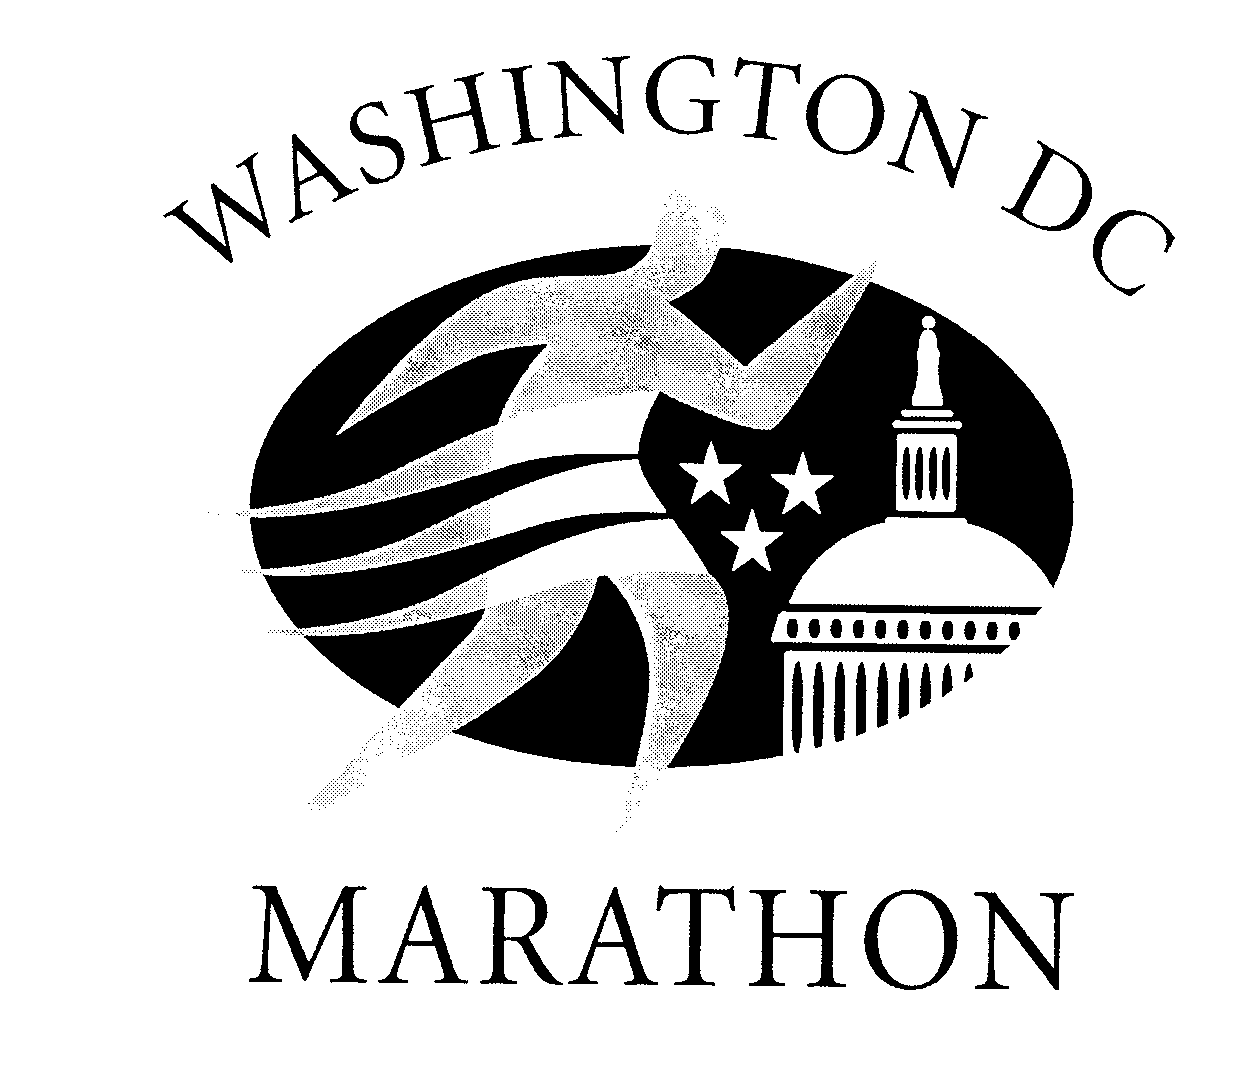  WASHINGTON DC MARATHON